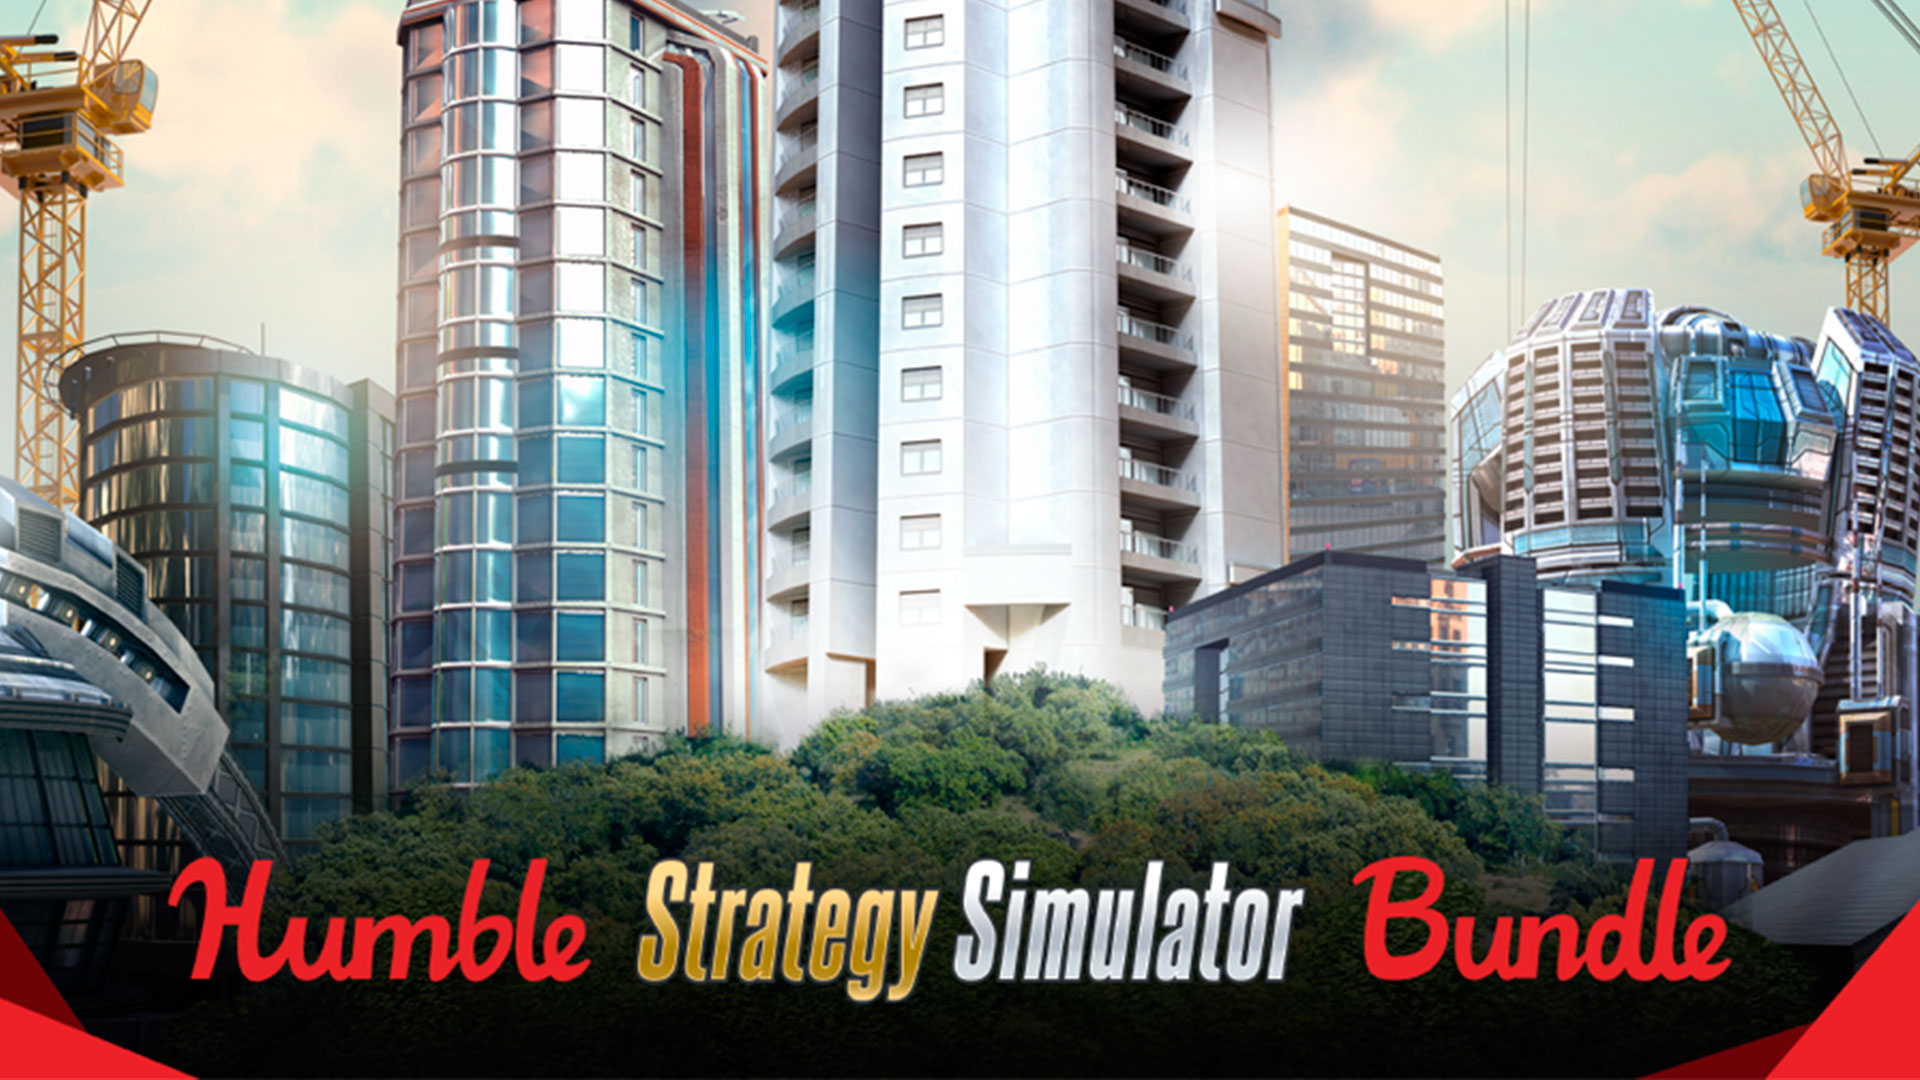 Humble Strategy Simulator